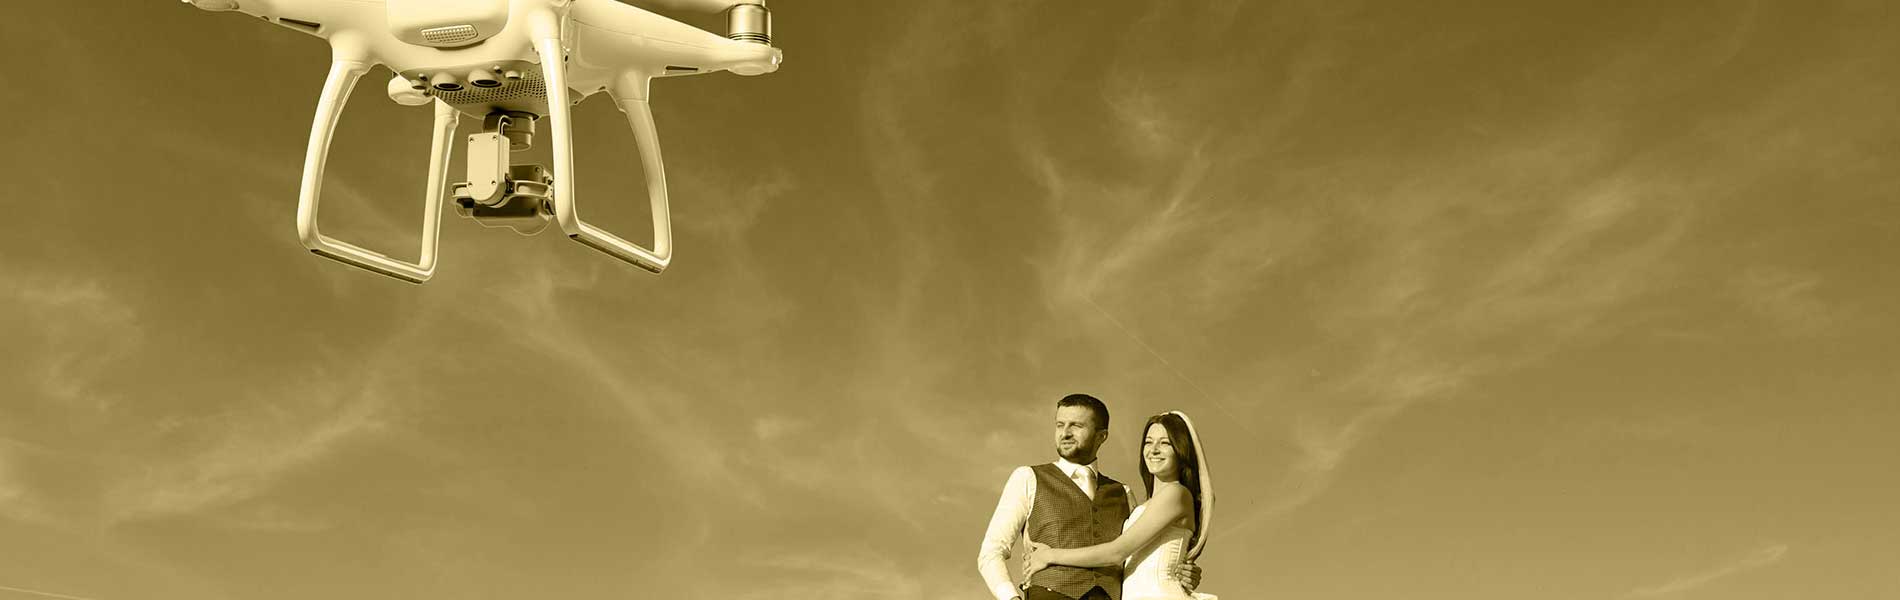 Photo mariage drone